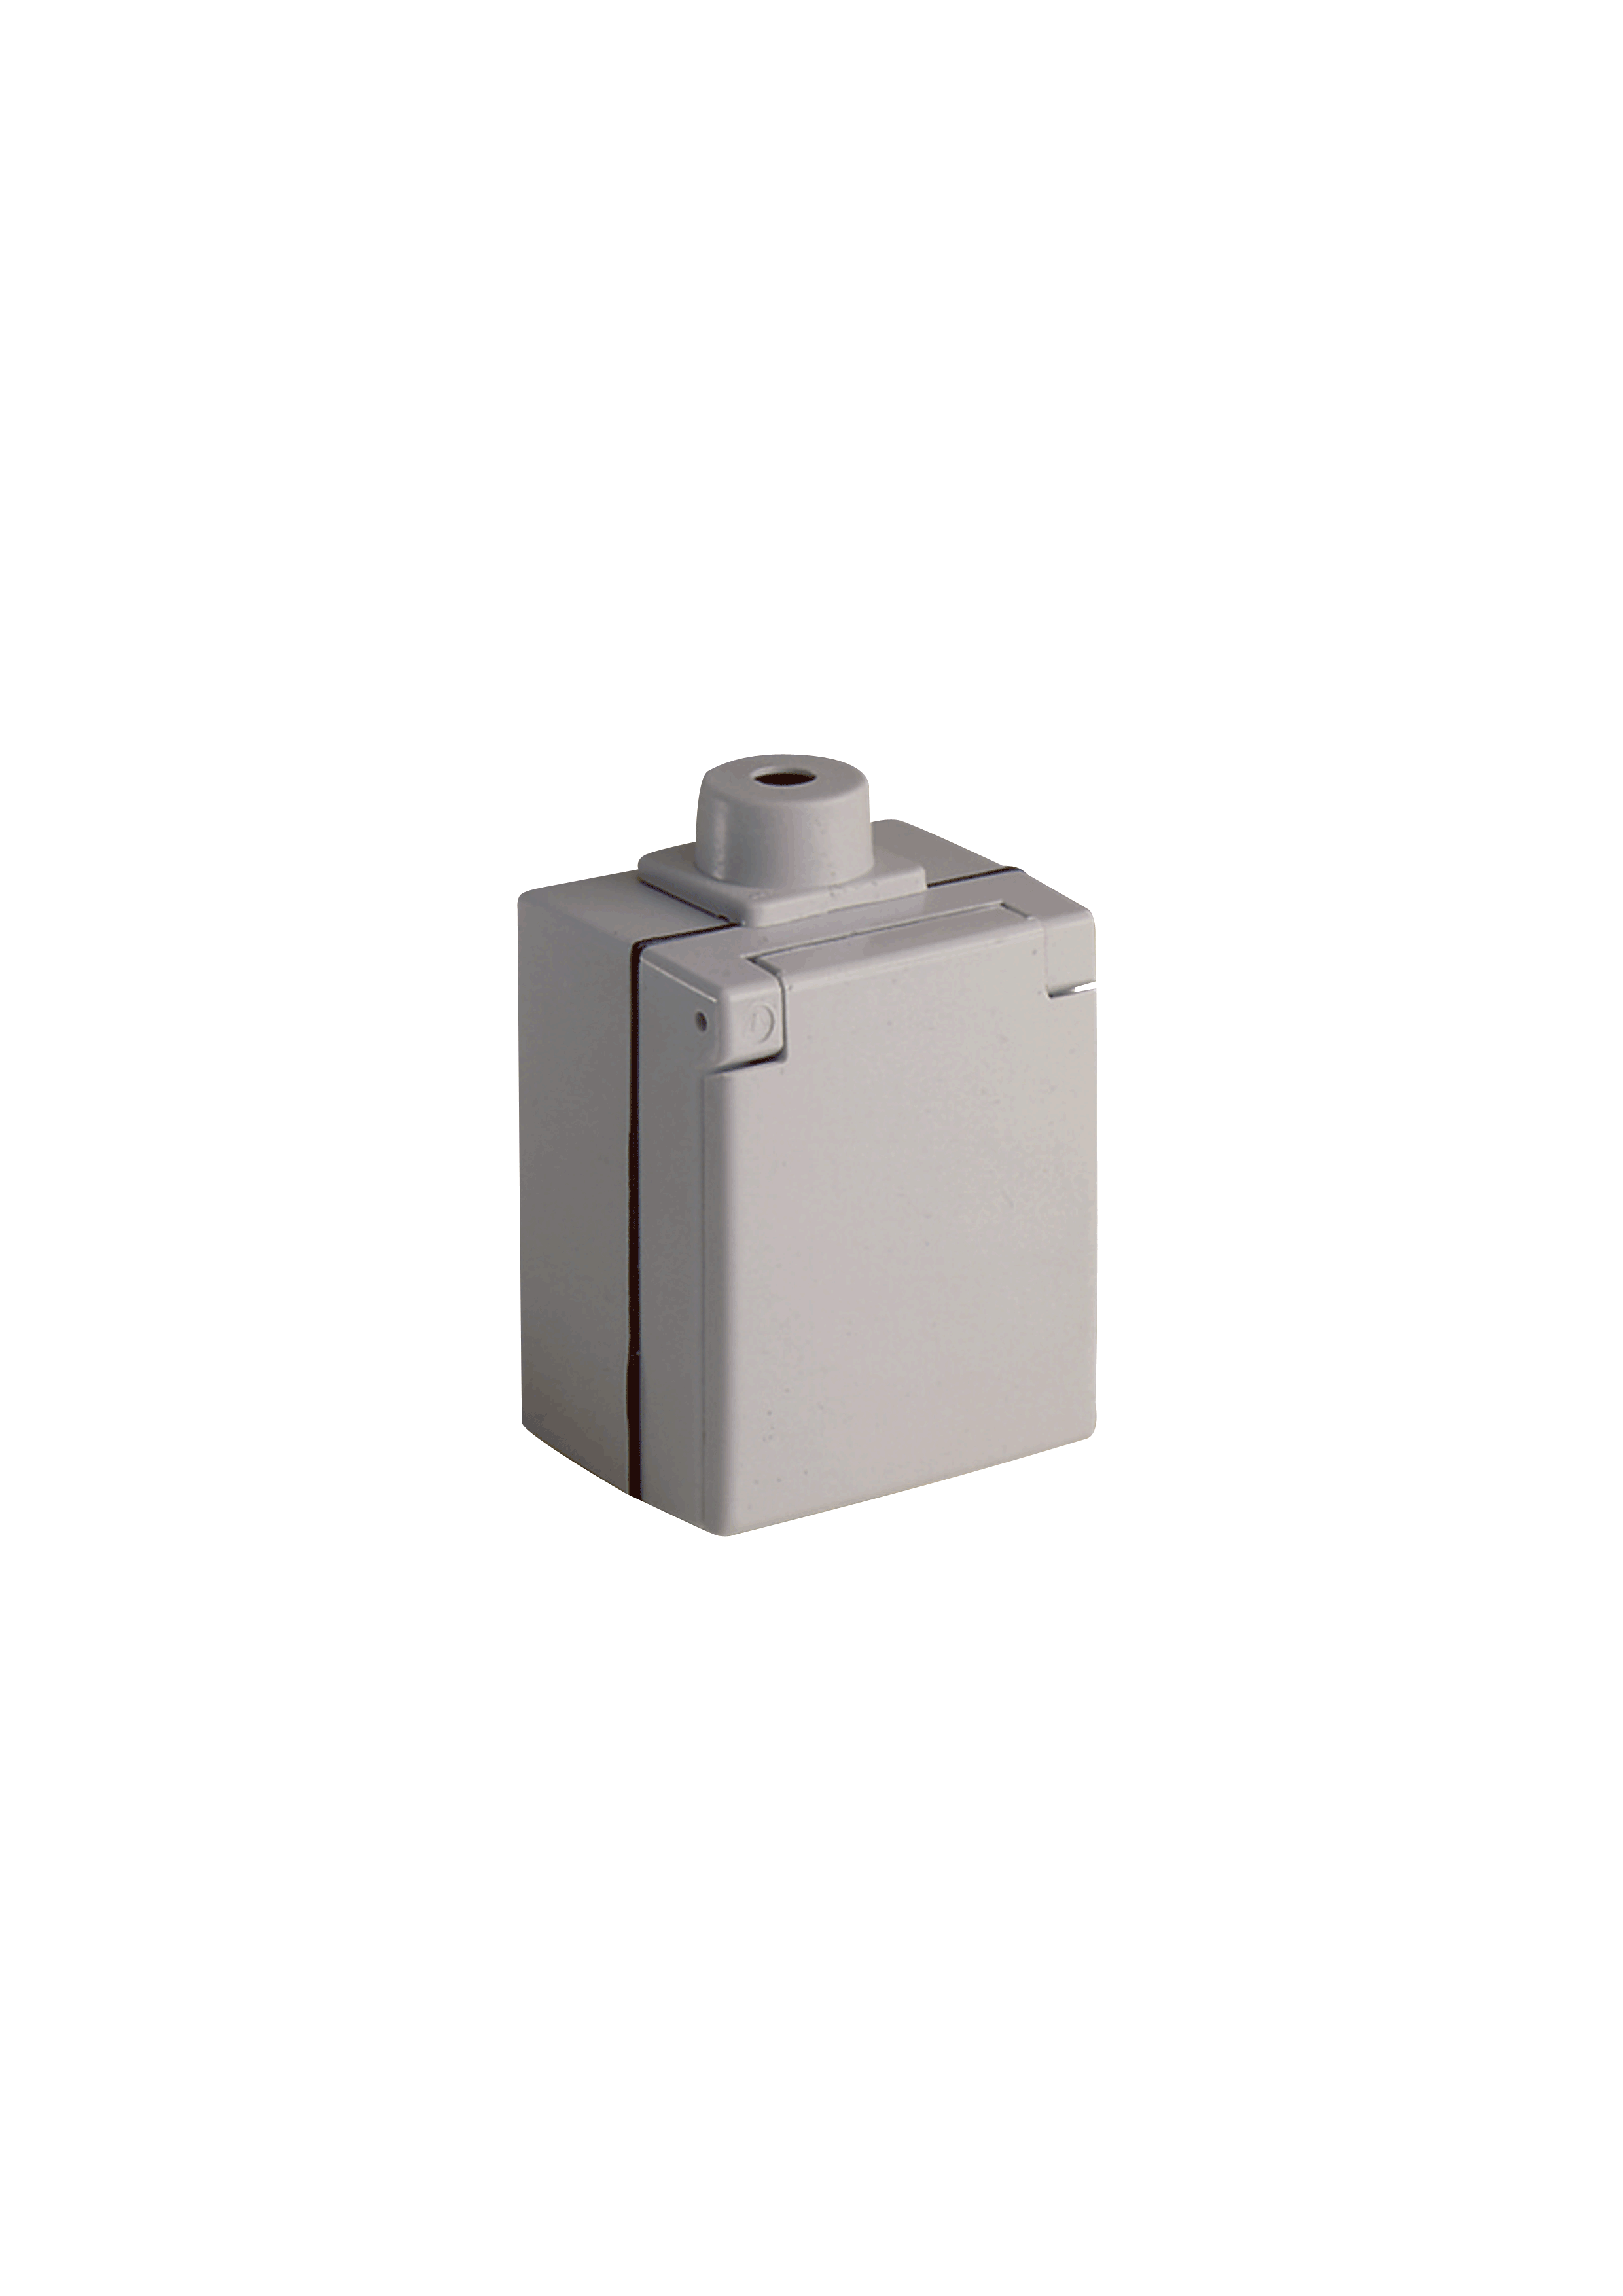 PERILEX surface mounted socket, 16 A, IP44, grey